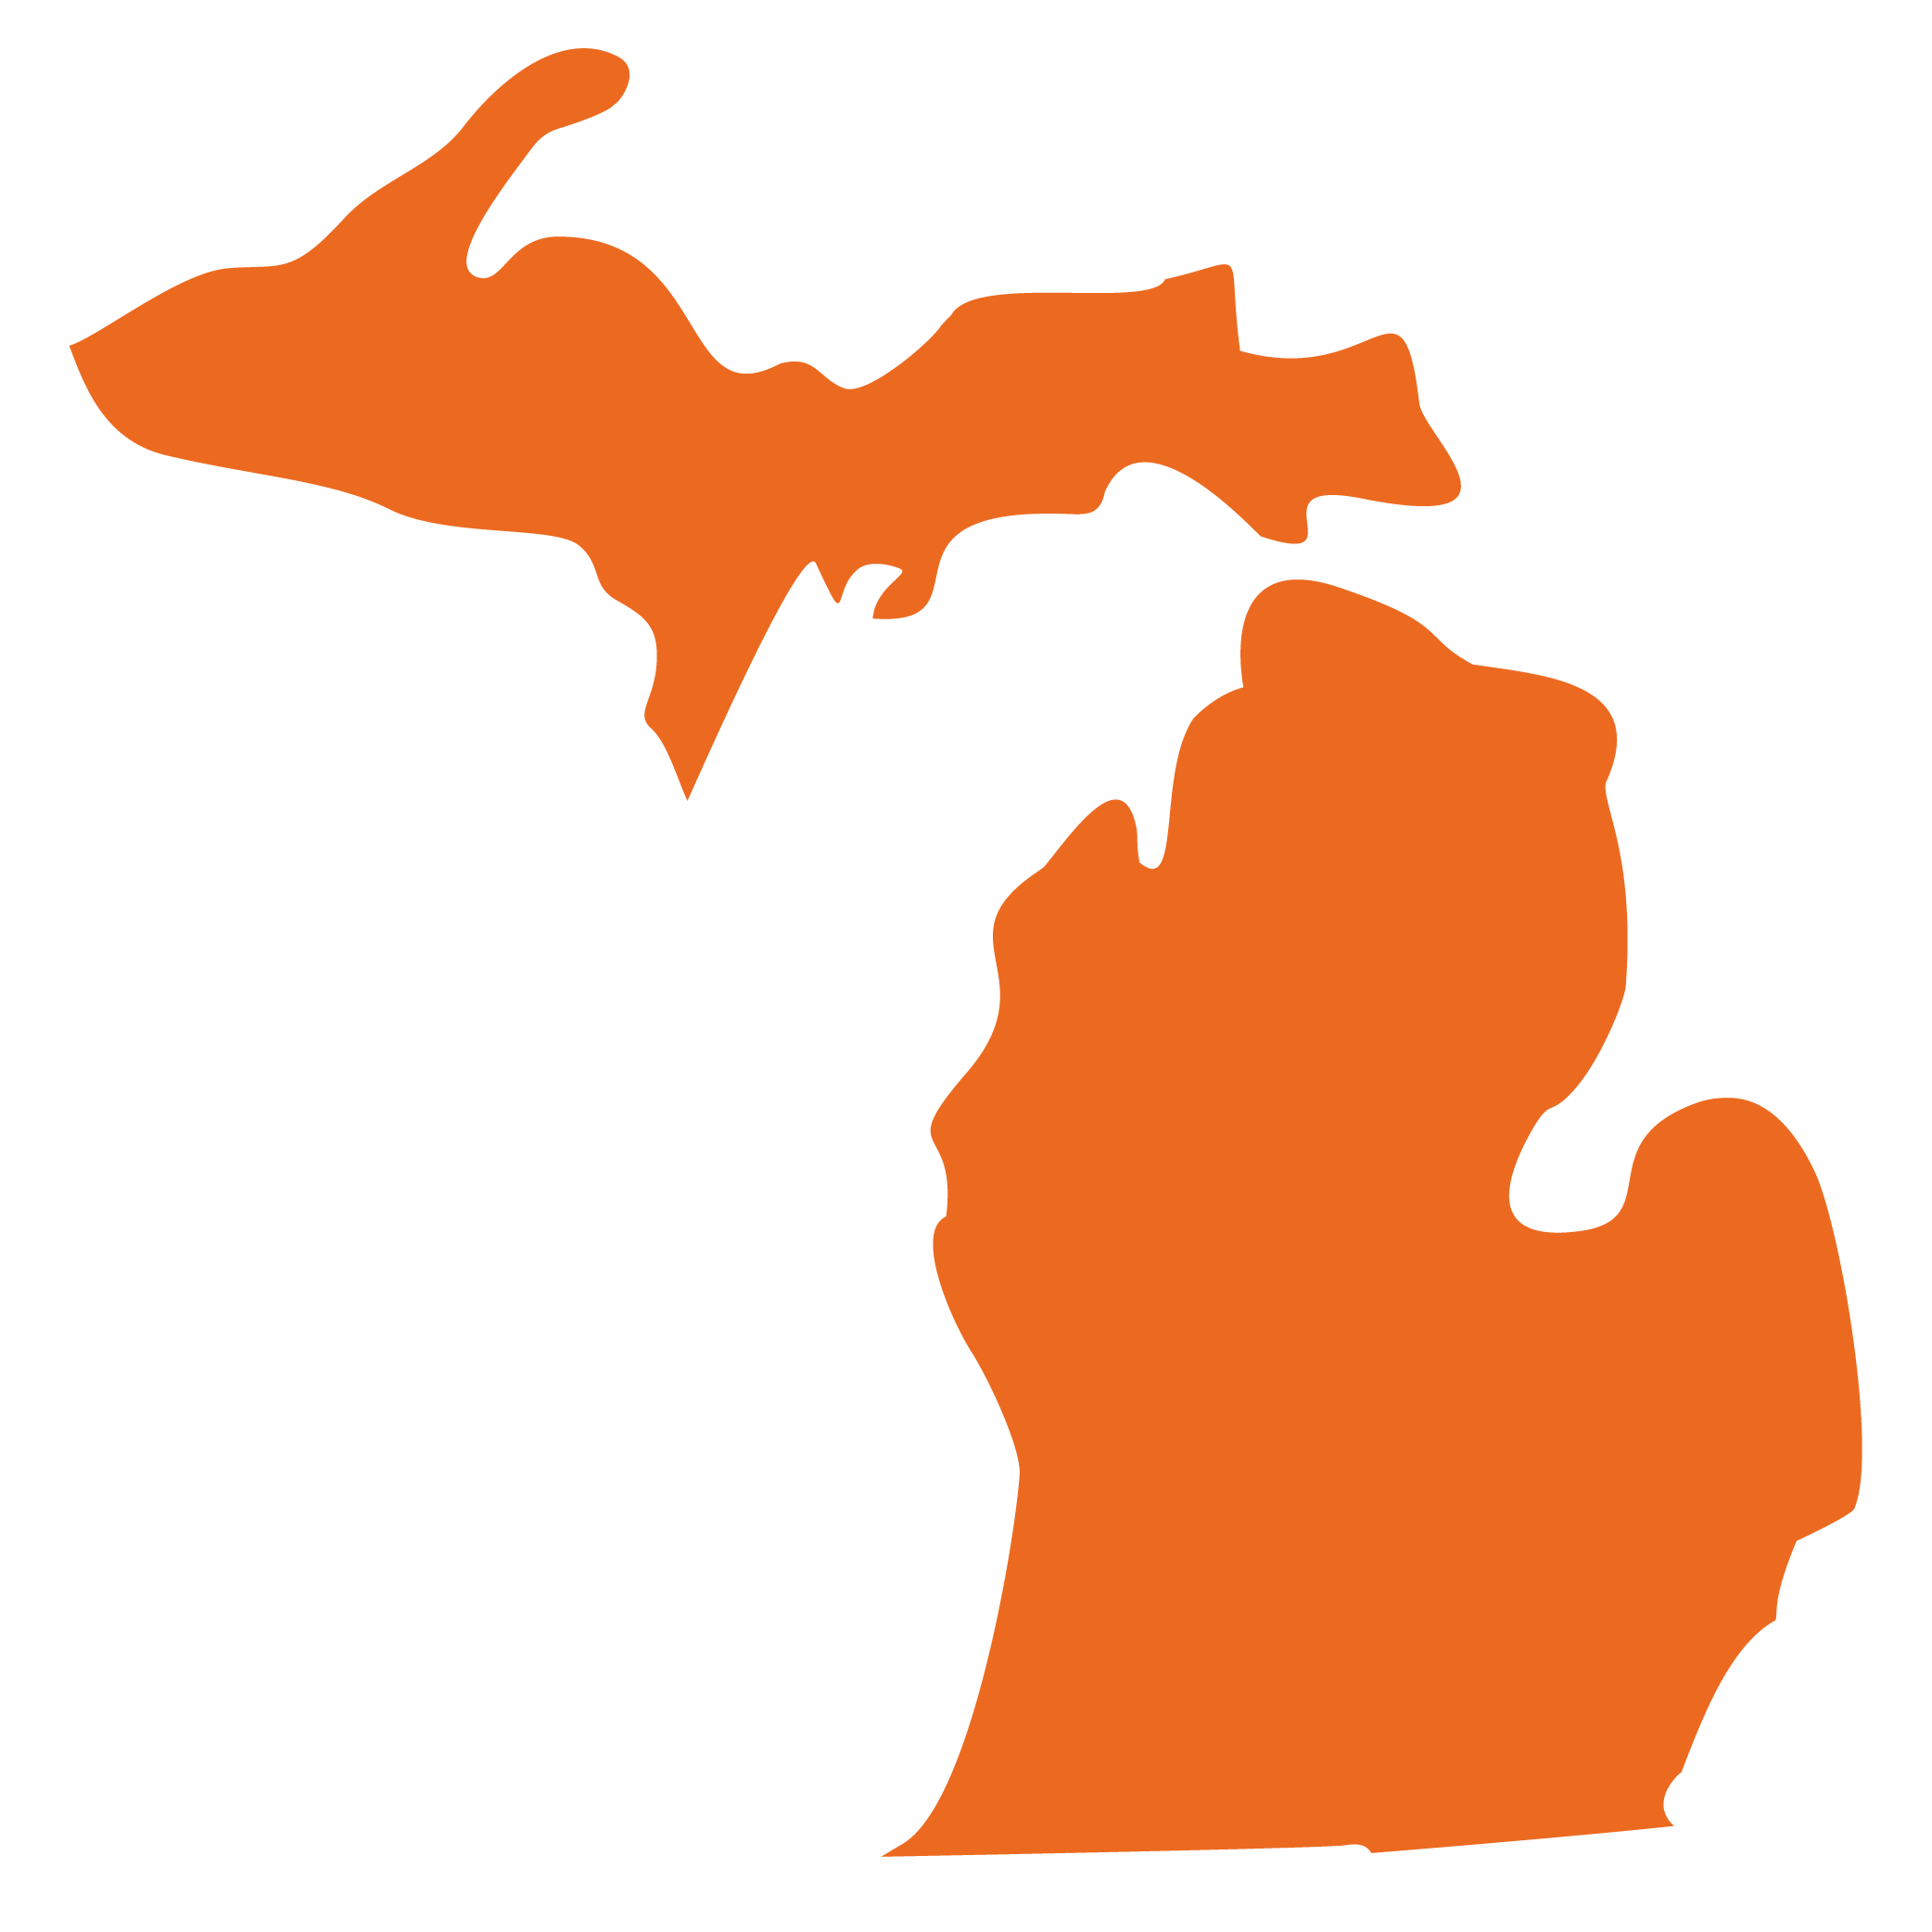 State of Michigan icon